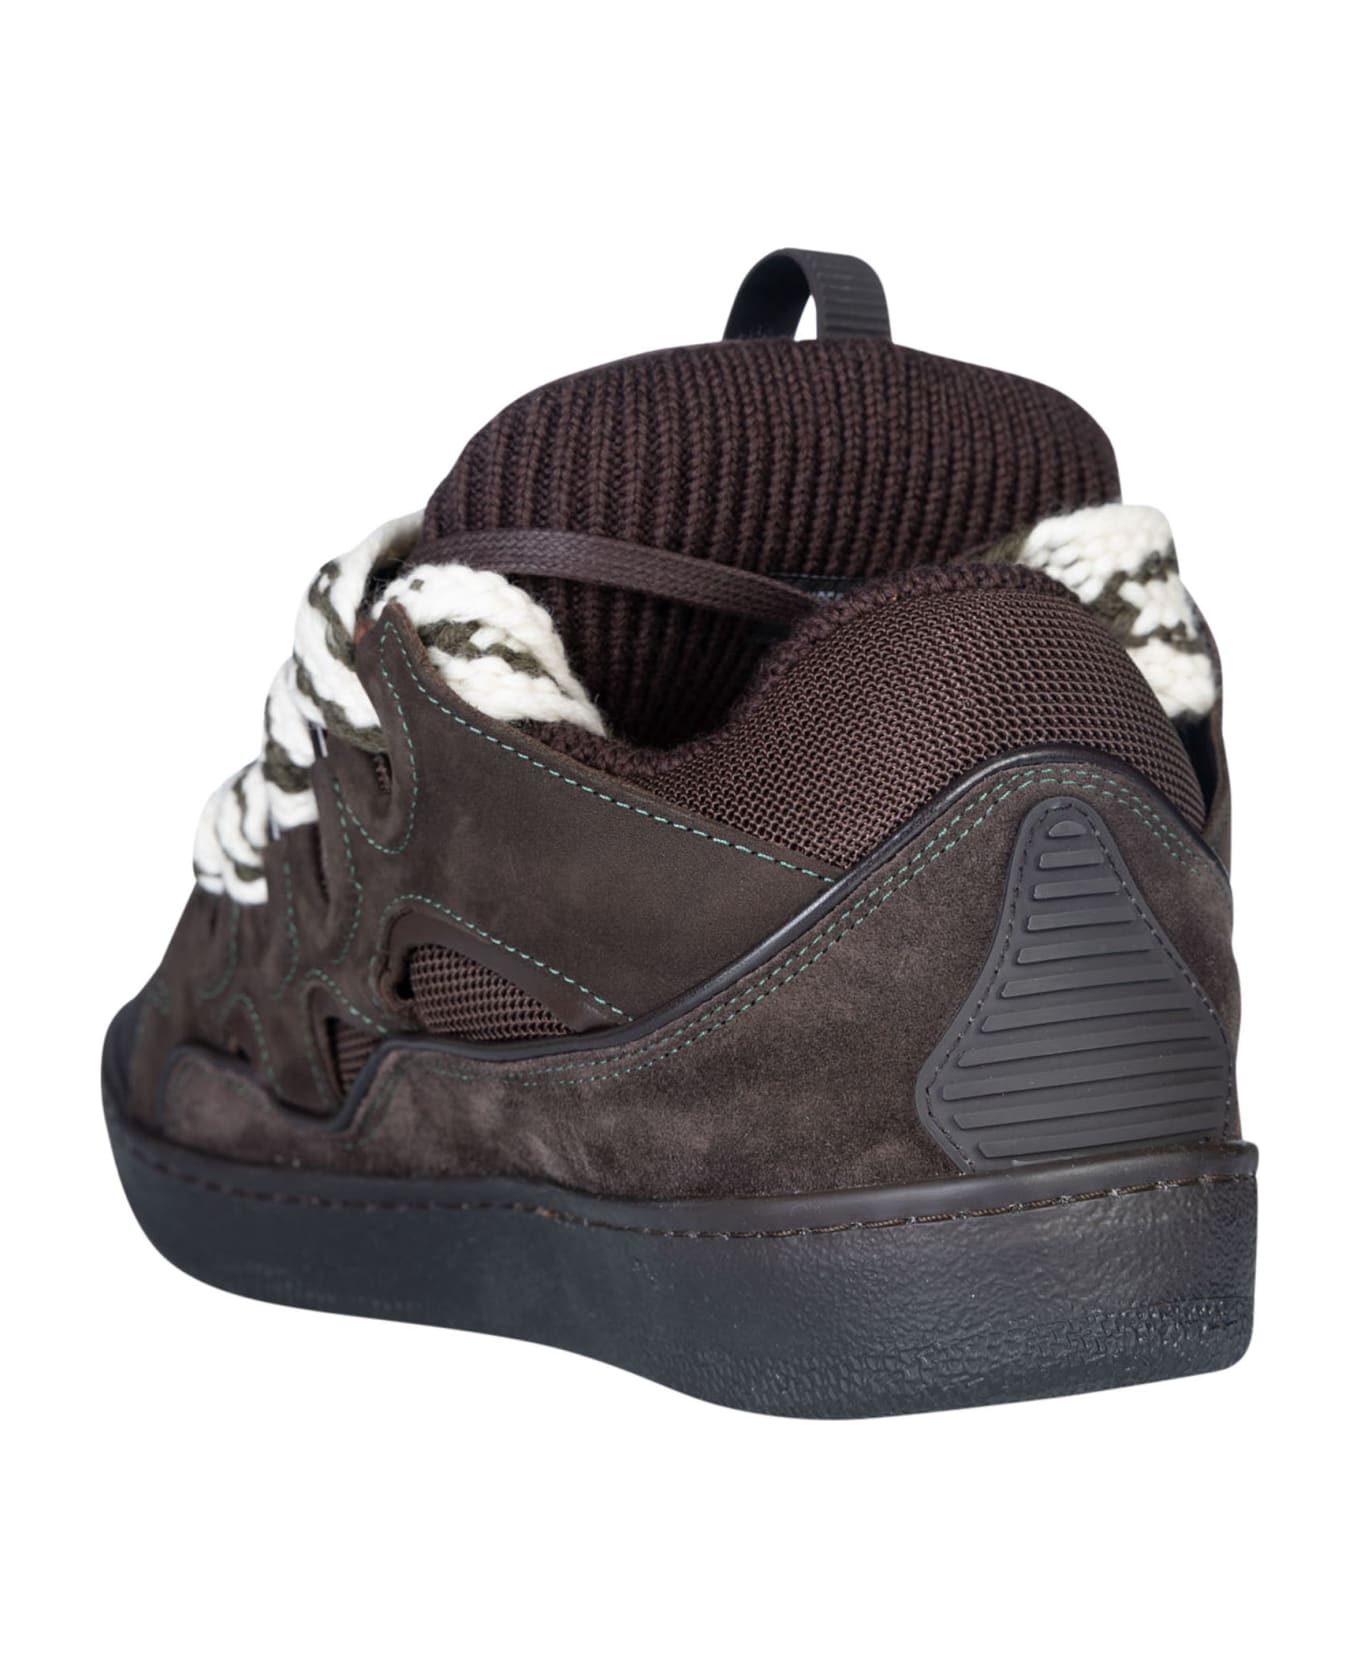 Lanvin Curb Sneakers - Cocoa